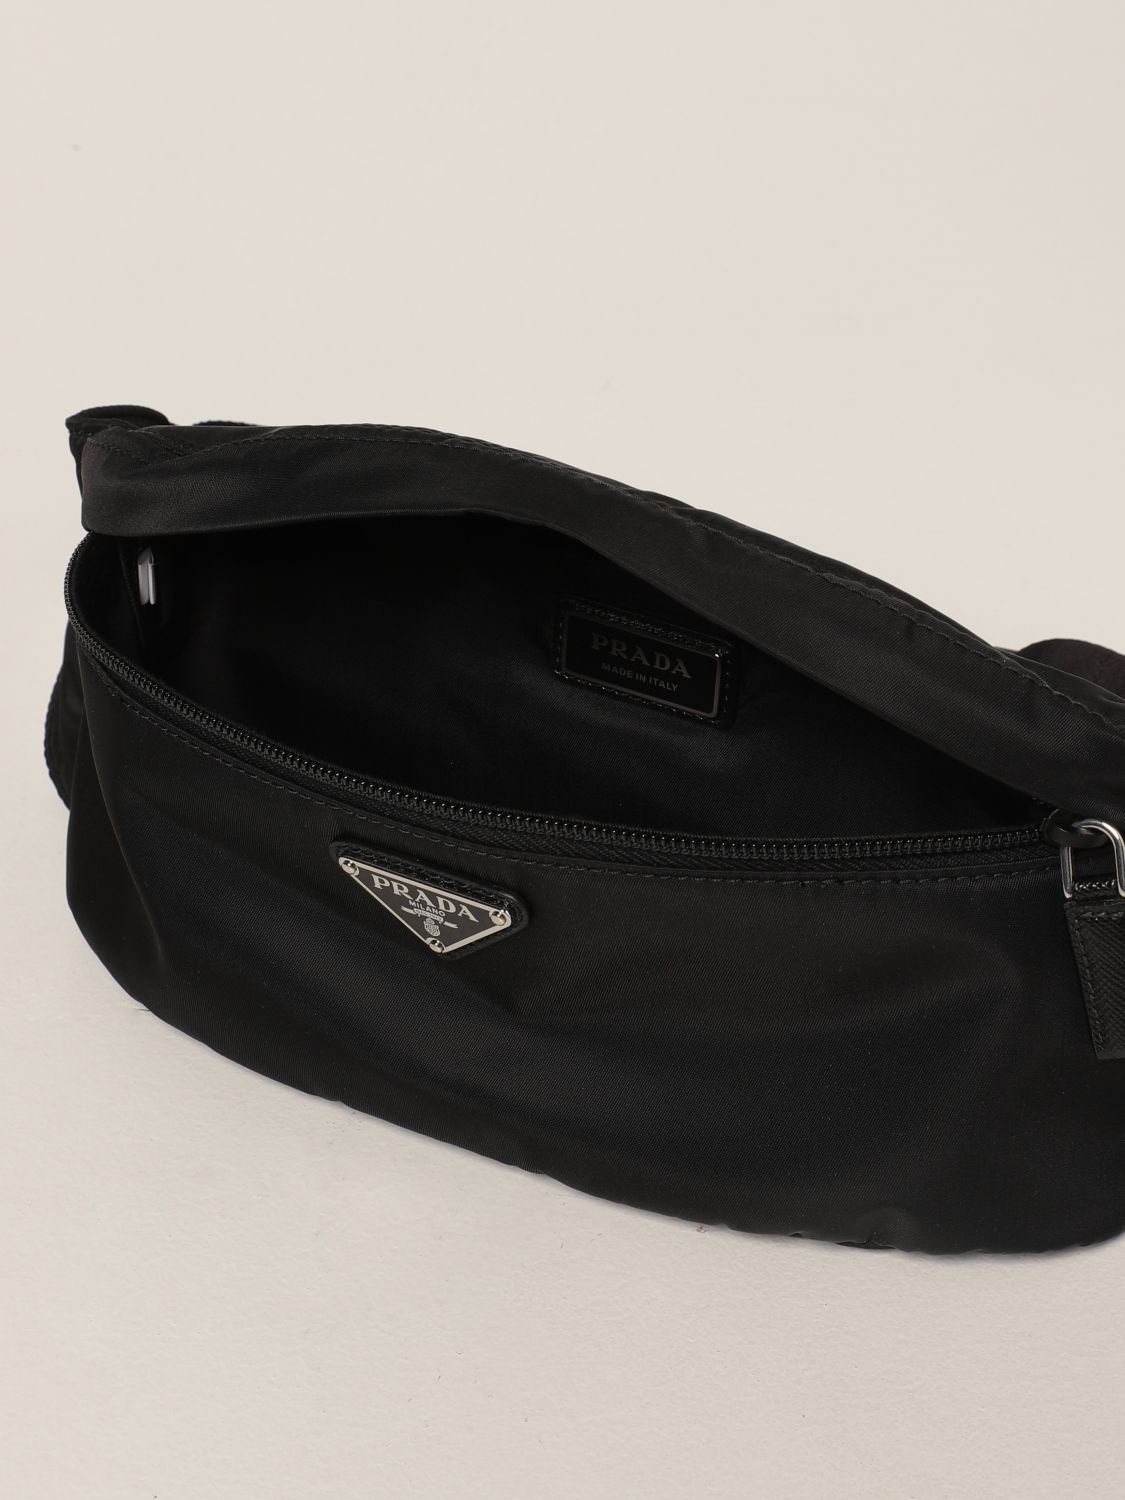 PRADA: Nylon Belt Bag - Black | Prada belt bag 2VL034 2DMG online on ...